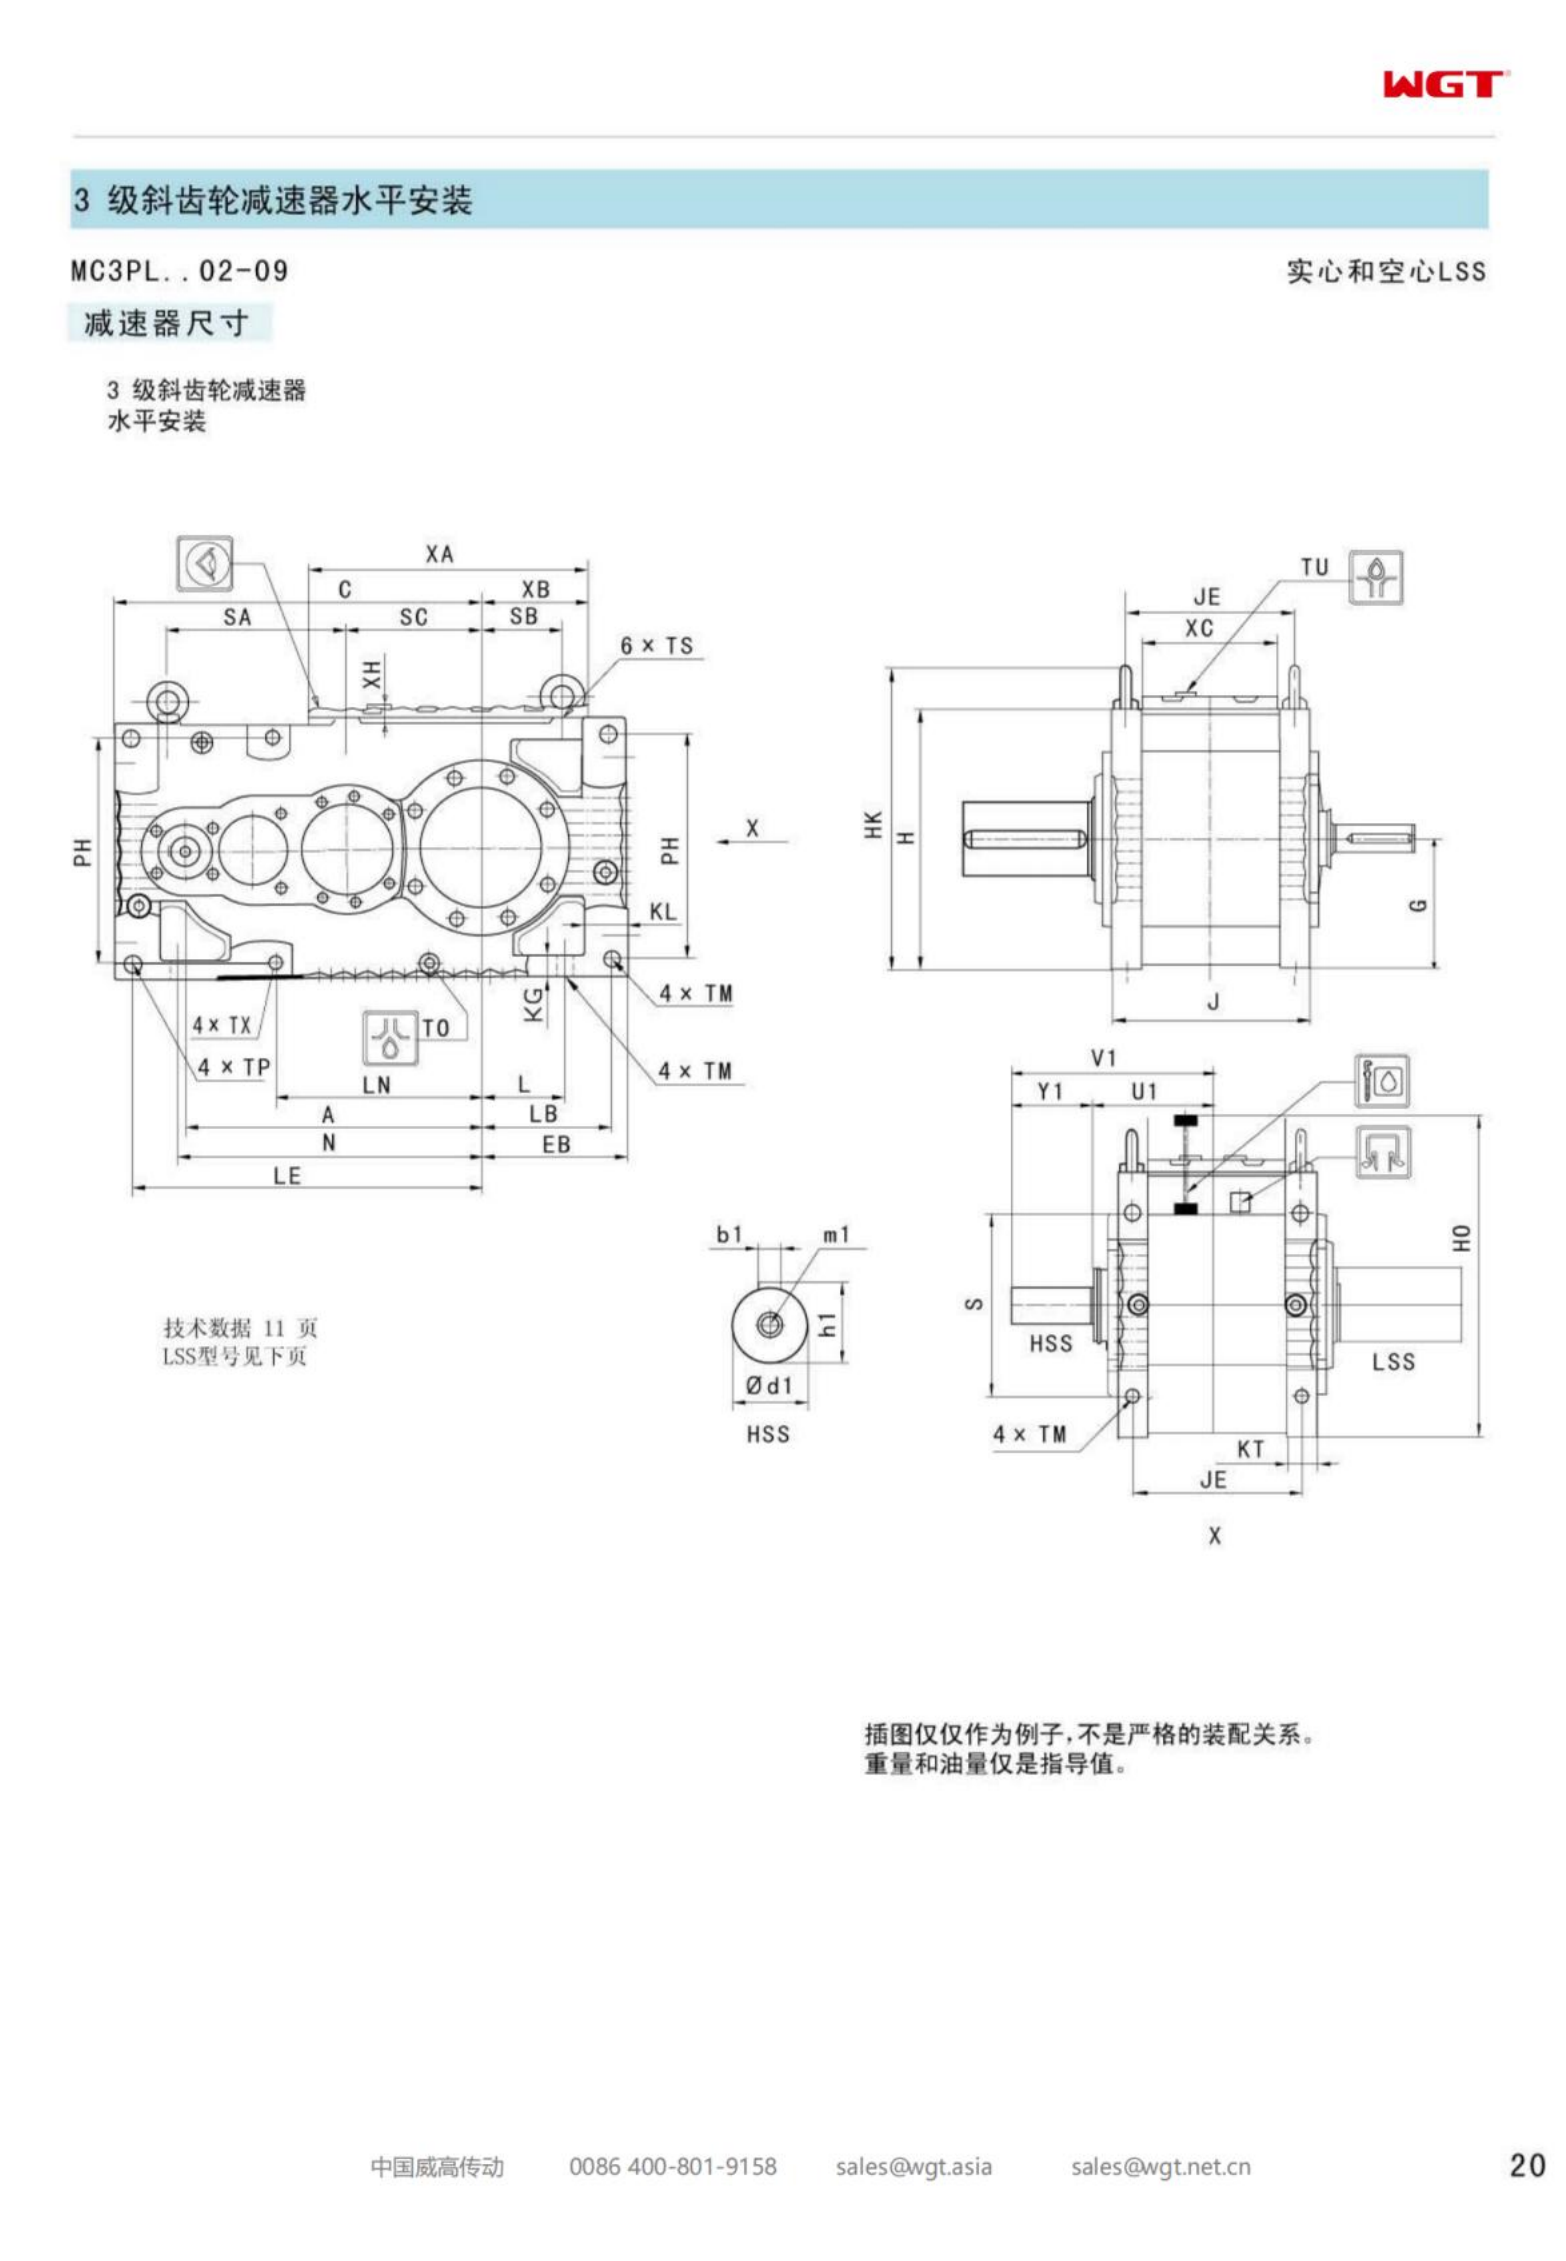 MC3PLHF04 replaces _SEW_MC_Series gearbox (patent)